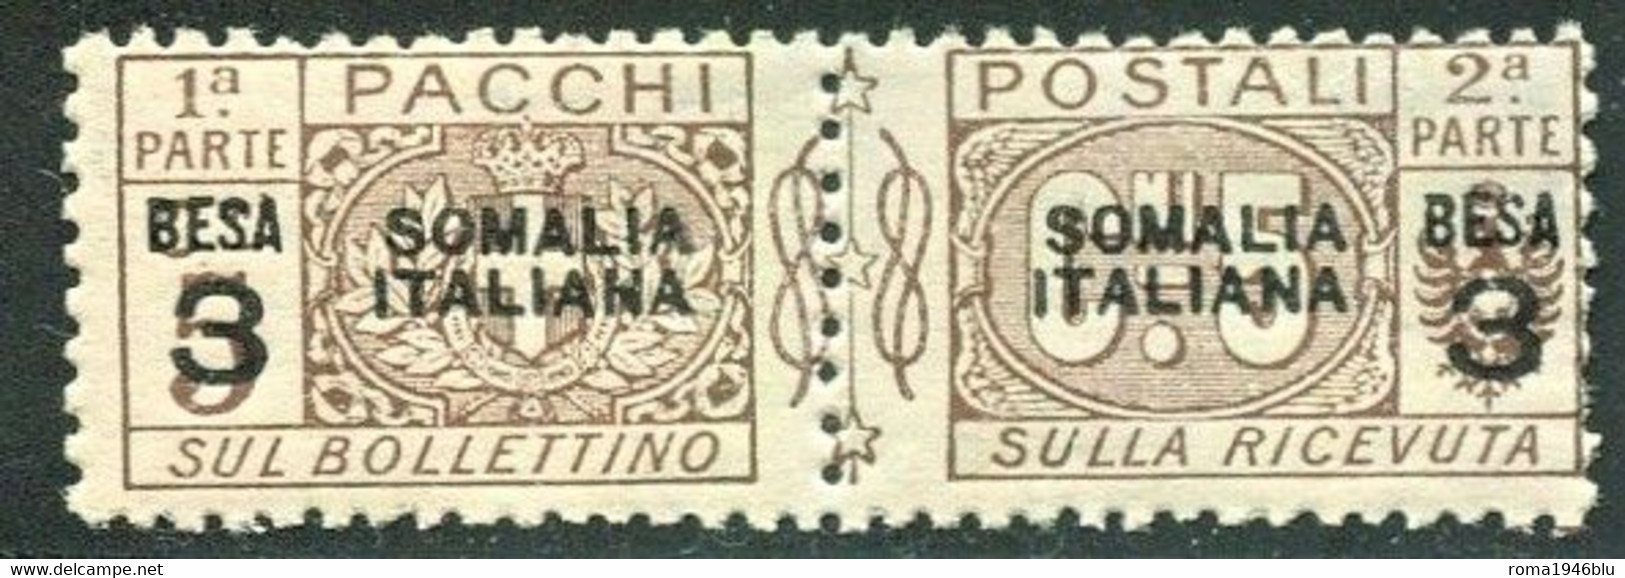 SOMALIA 1923 PACCHI POSTALI 3 B SU 5 C. SASSONE N.21  ** MNH - Somalie